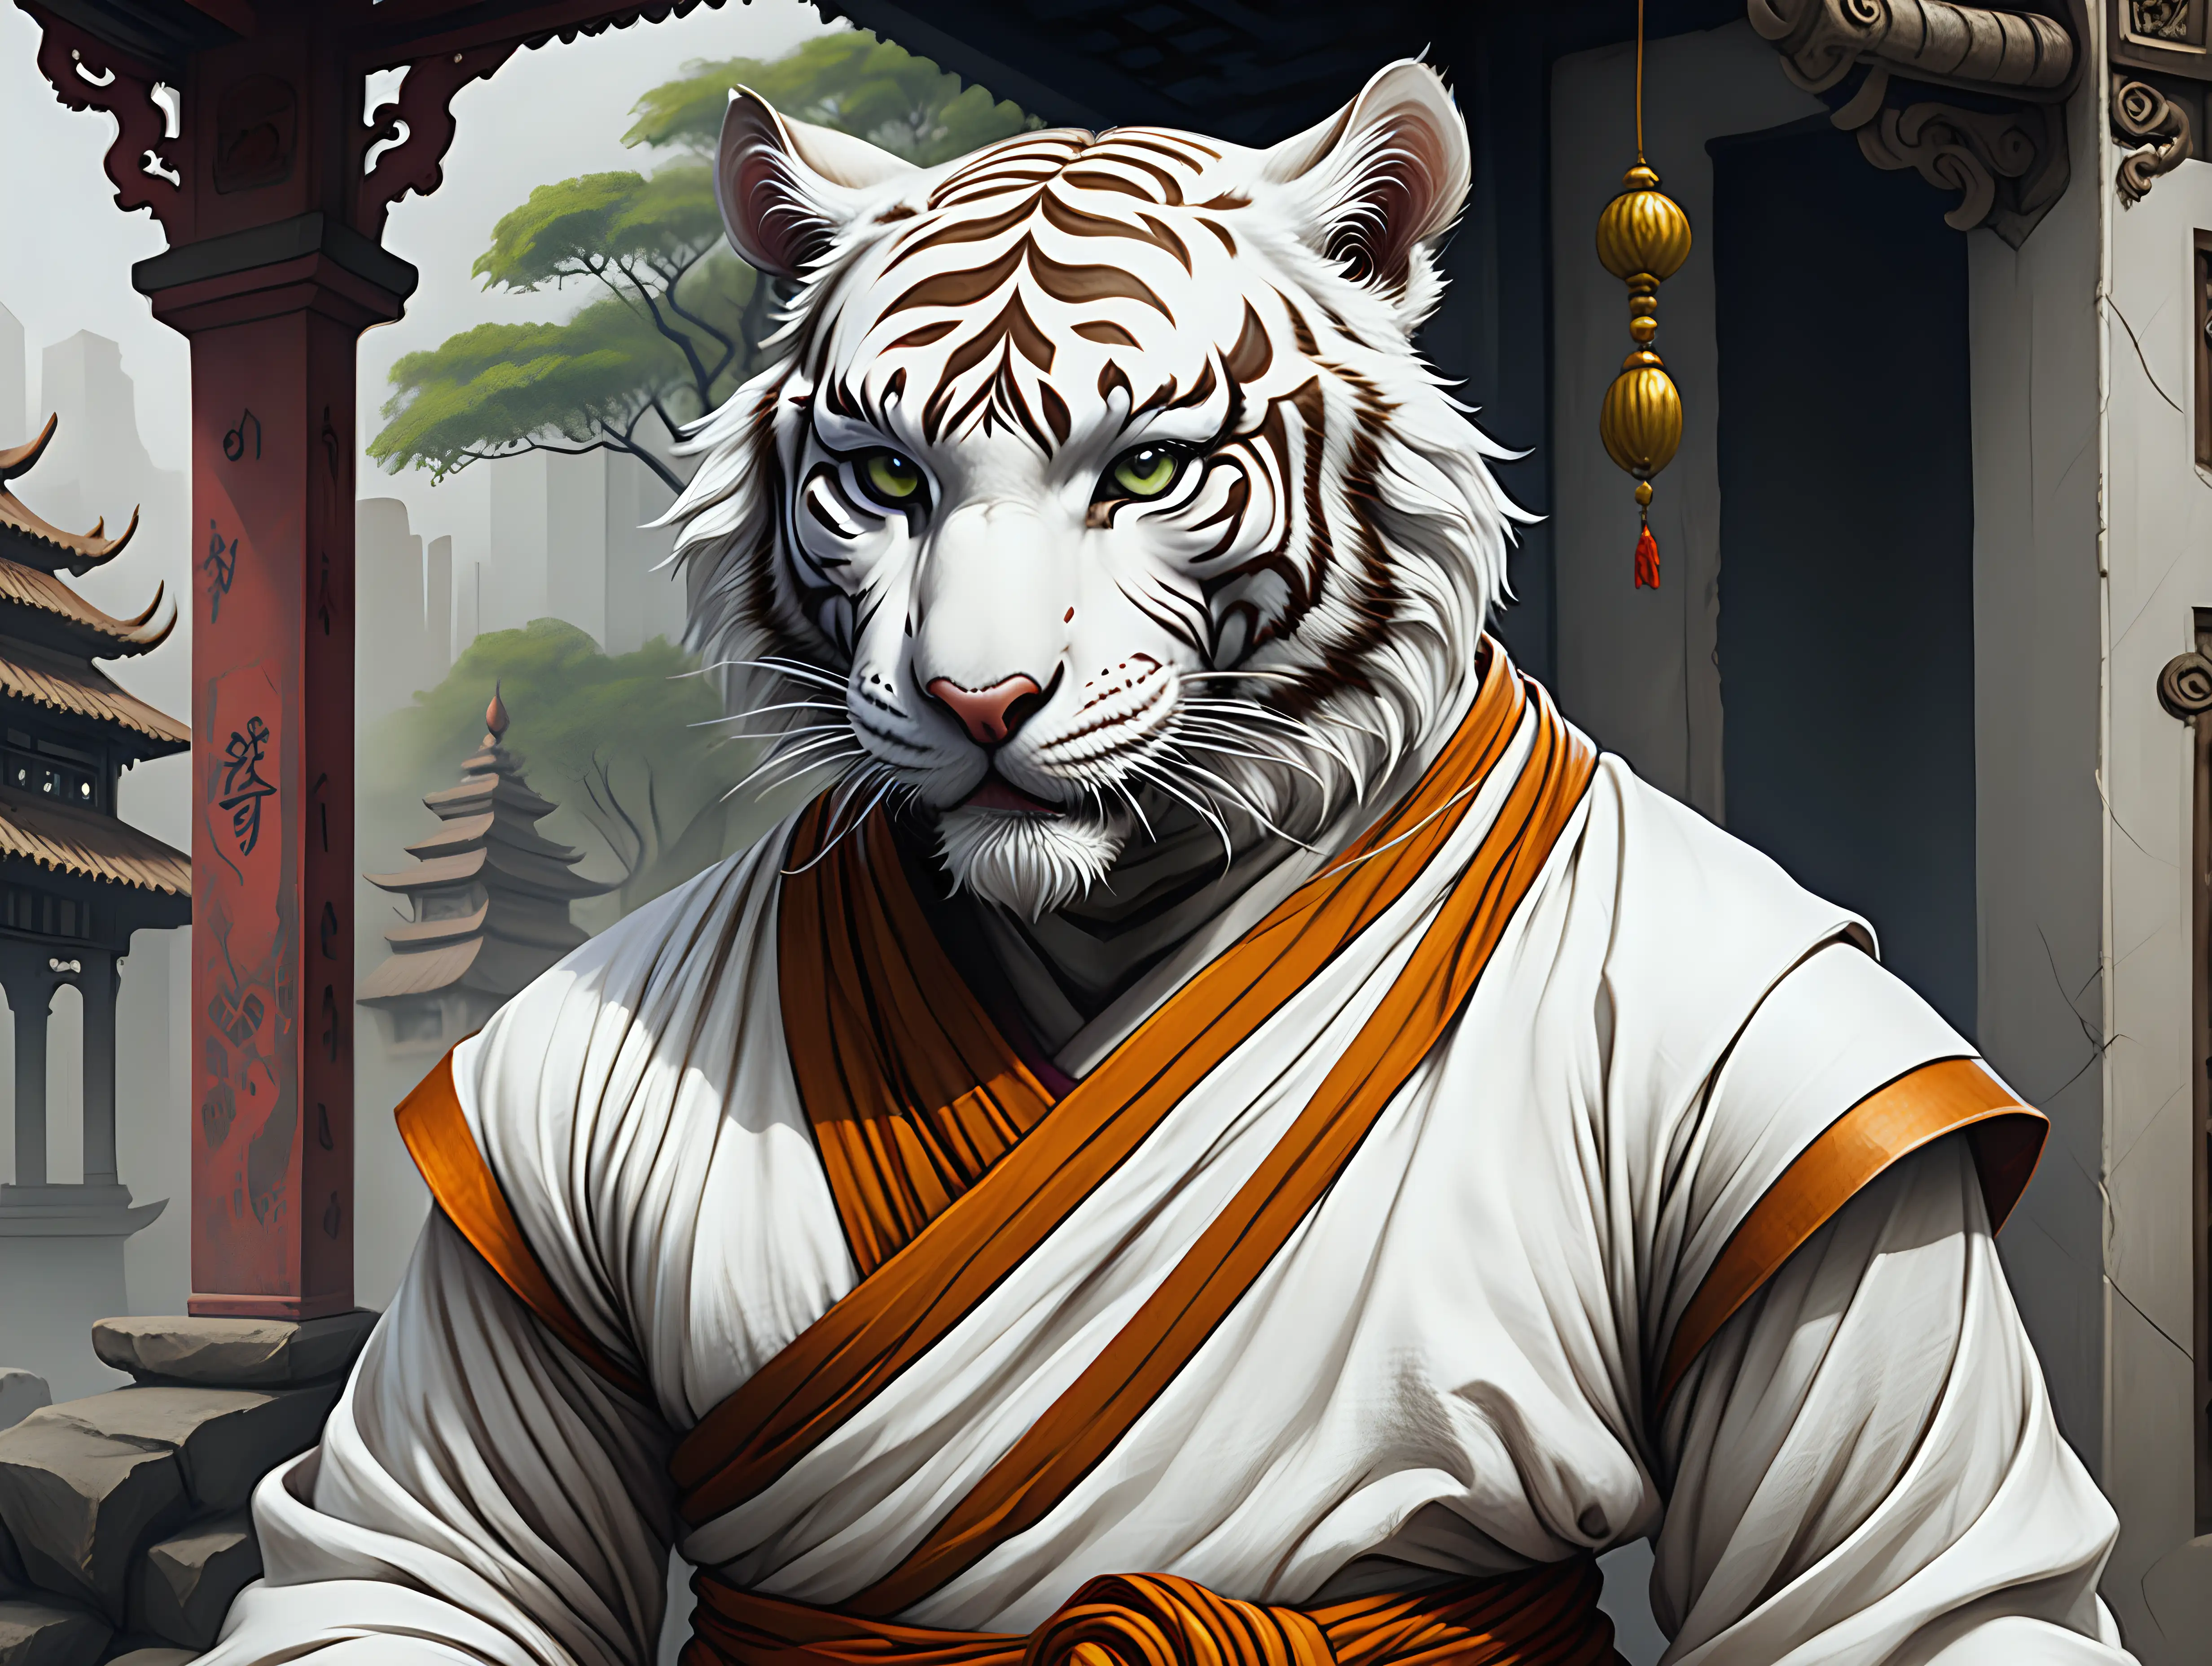 Anthropomorphic-White-Tiger-Monk-Meditating-in-Serene-Setting